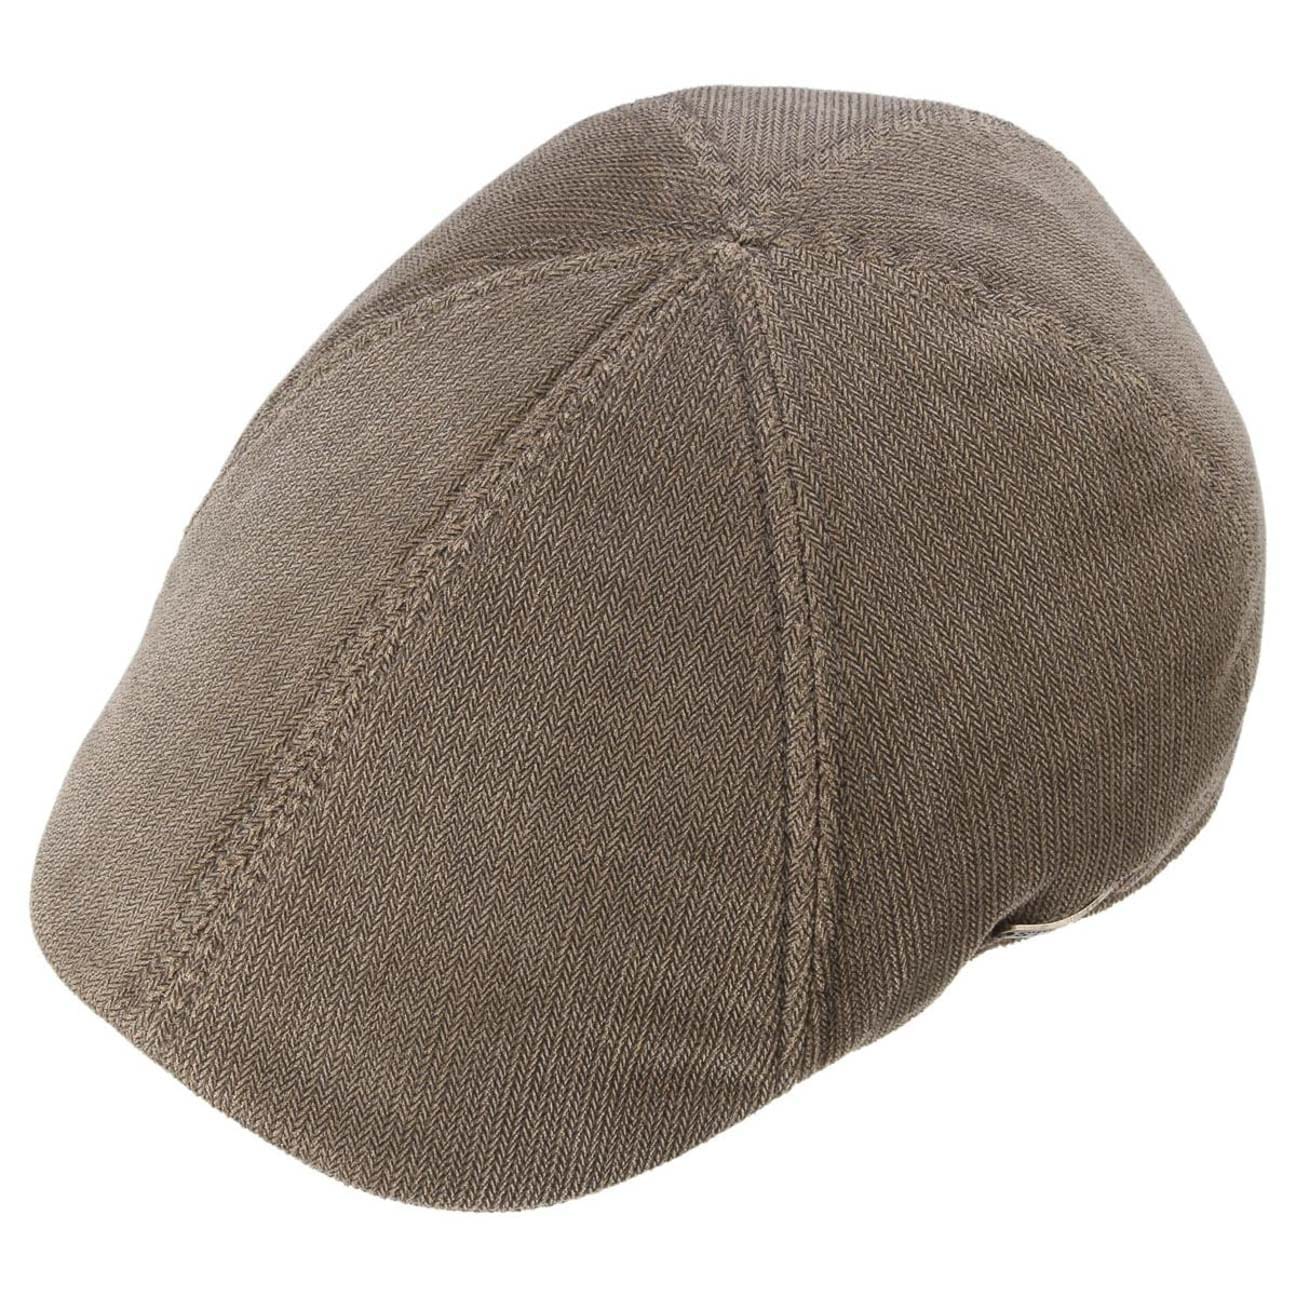 Texas Cotton Gatsby Flat Cap by Stetson, EUR 49,00 --> Hats, caps ...